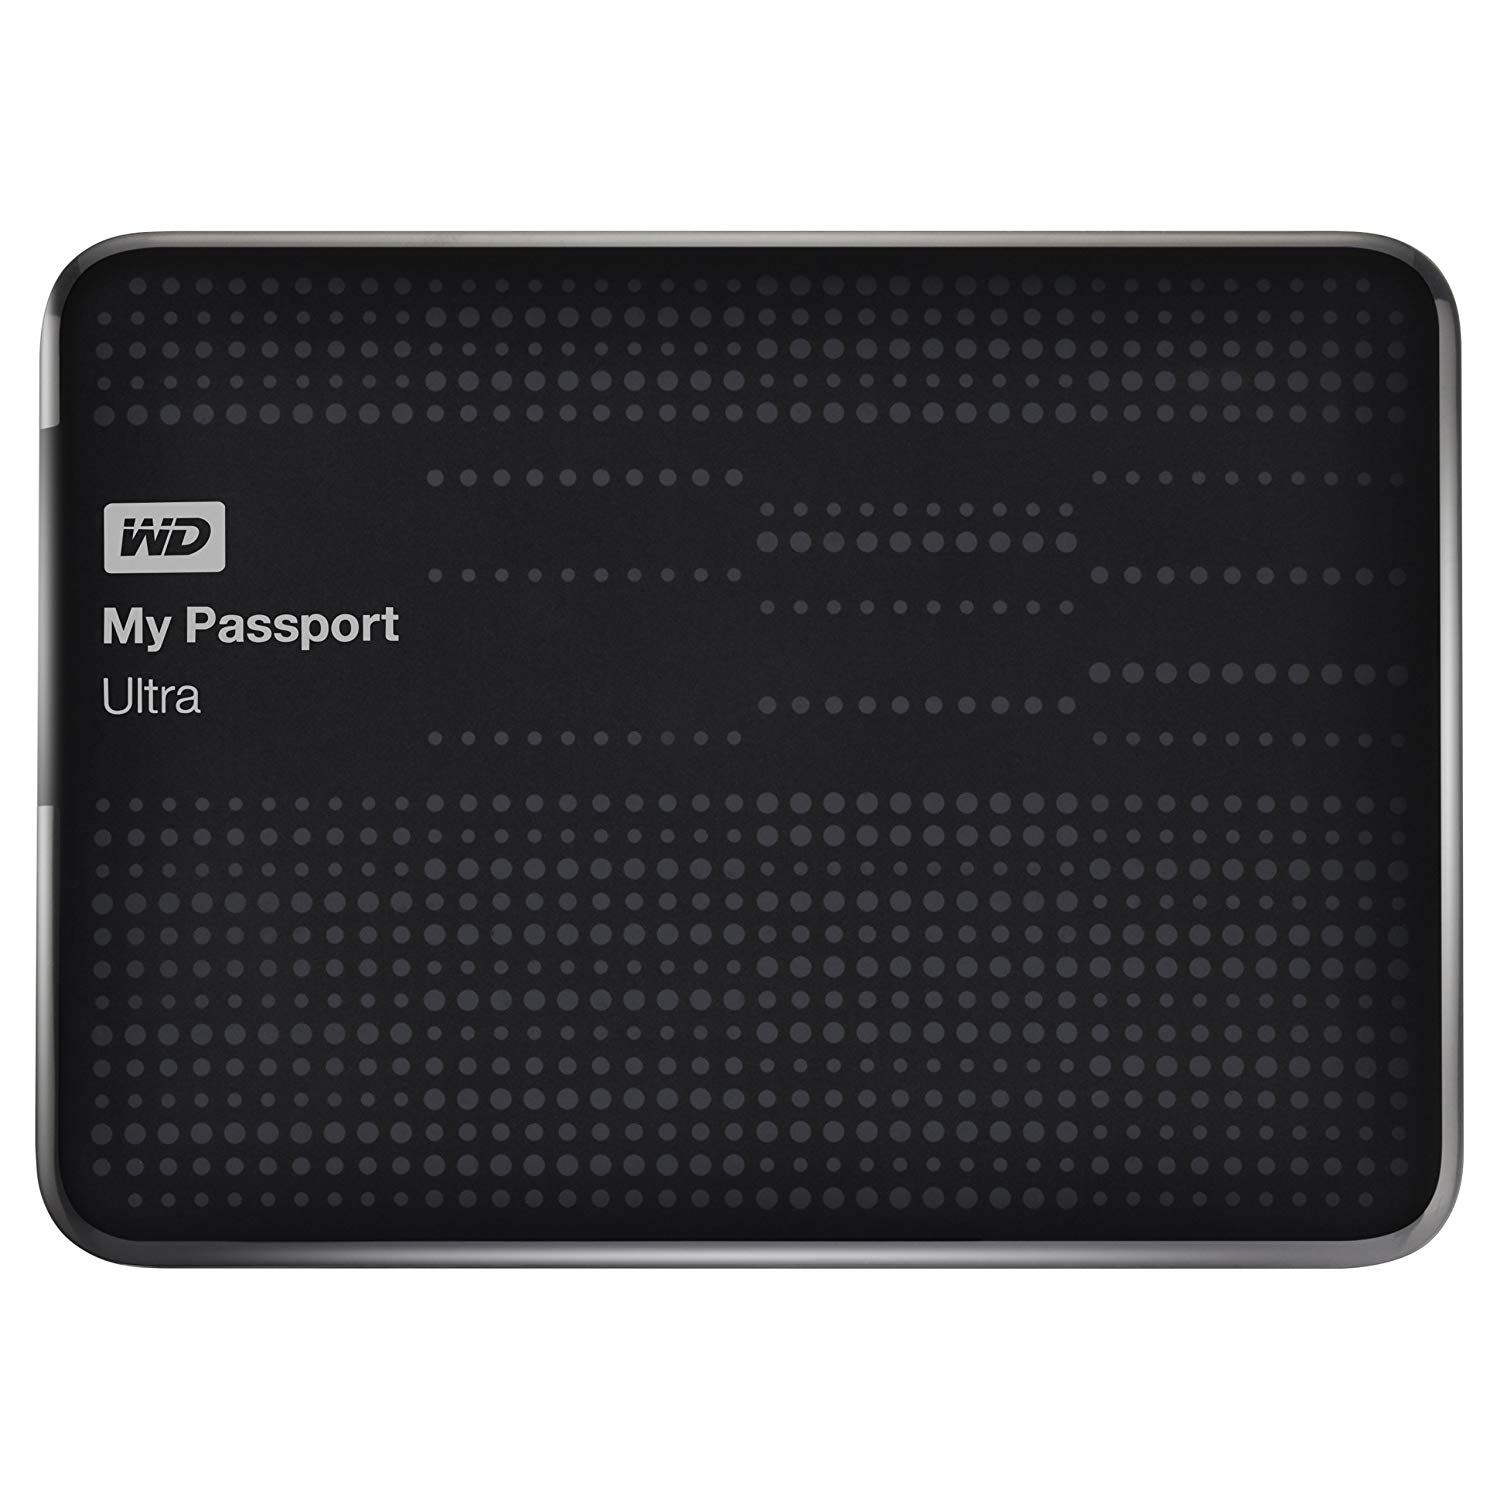 WD My Passport Ultra 1TB Best External Hard Drives for PS4